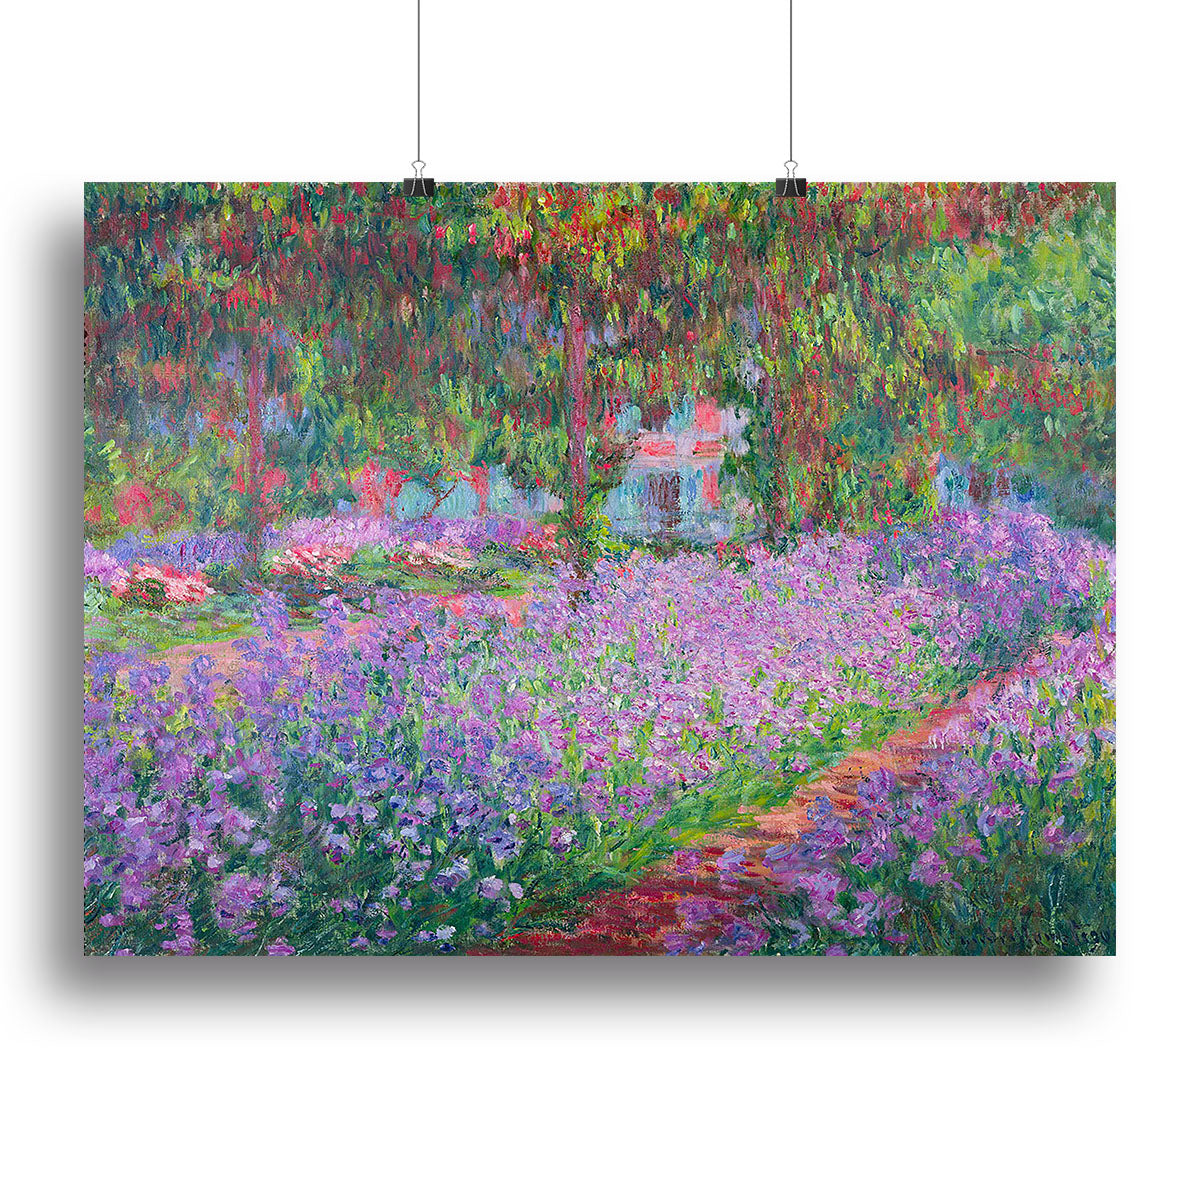 Artists Garden by Monet Canvas Print or Poster - Canvas Art Rocks - 2